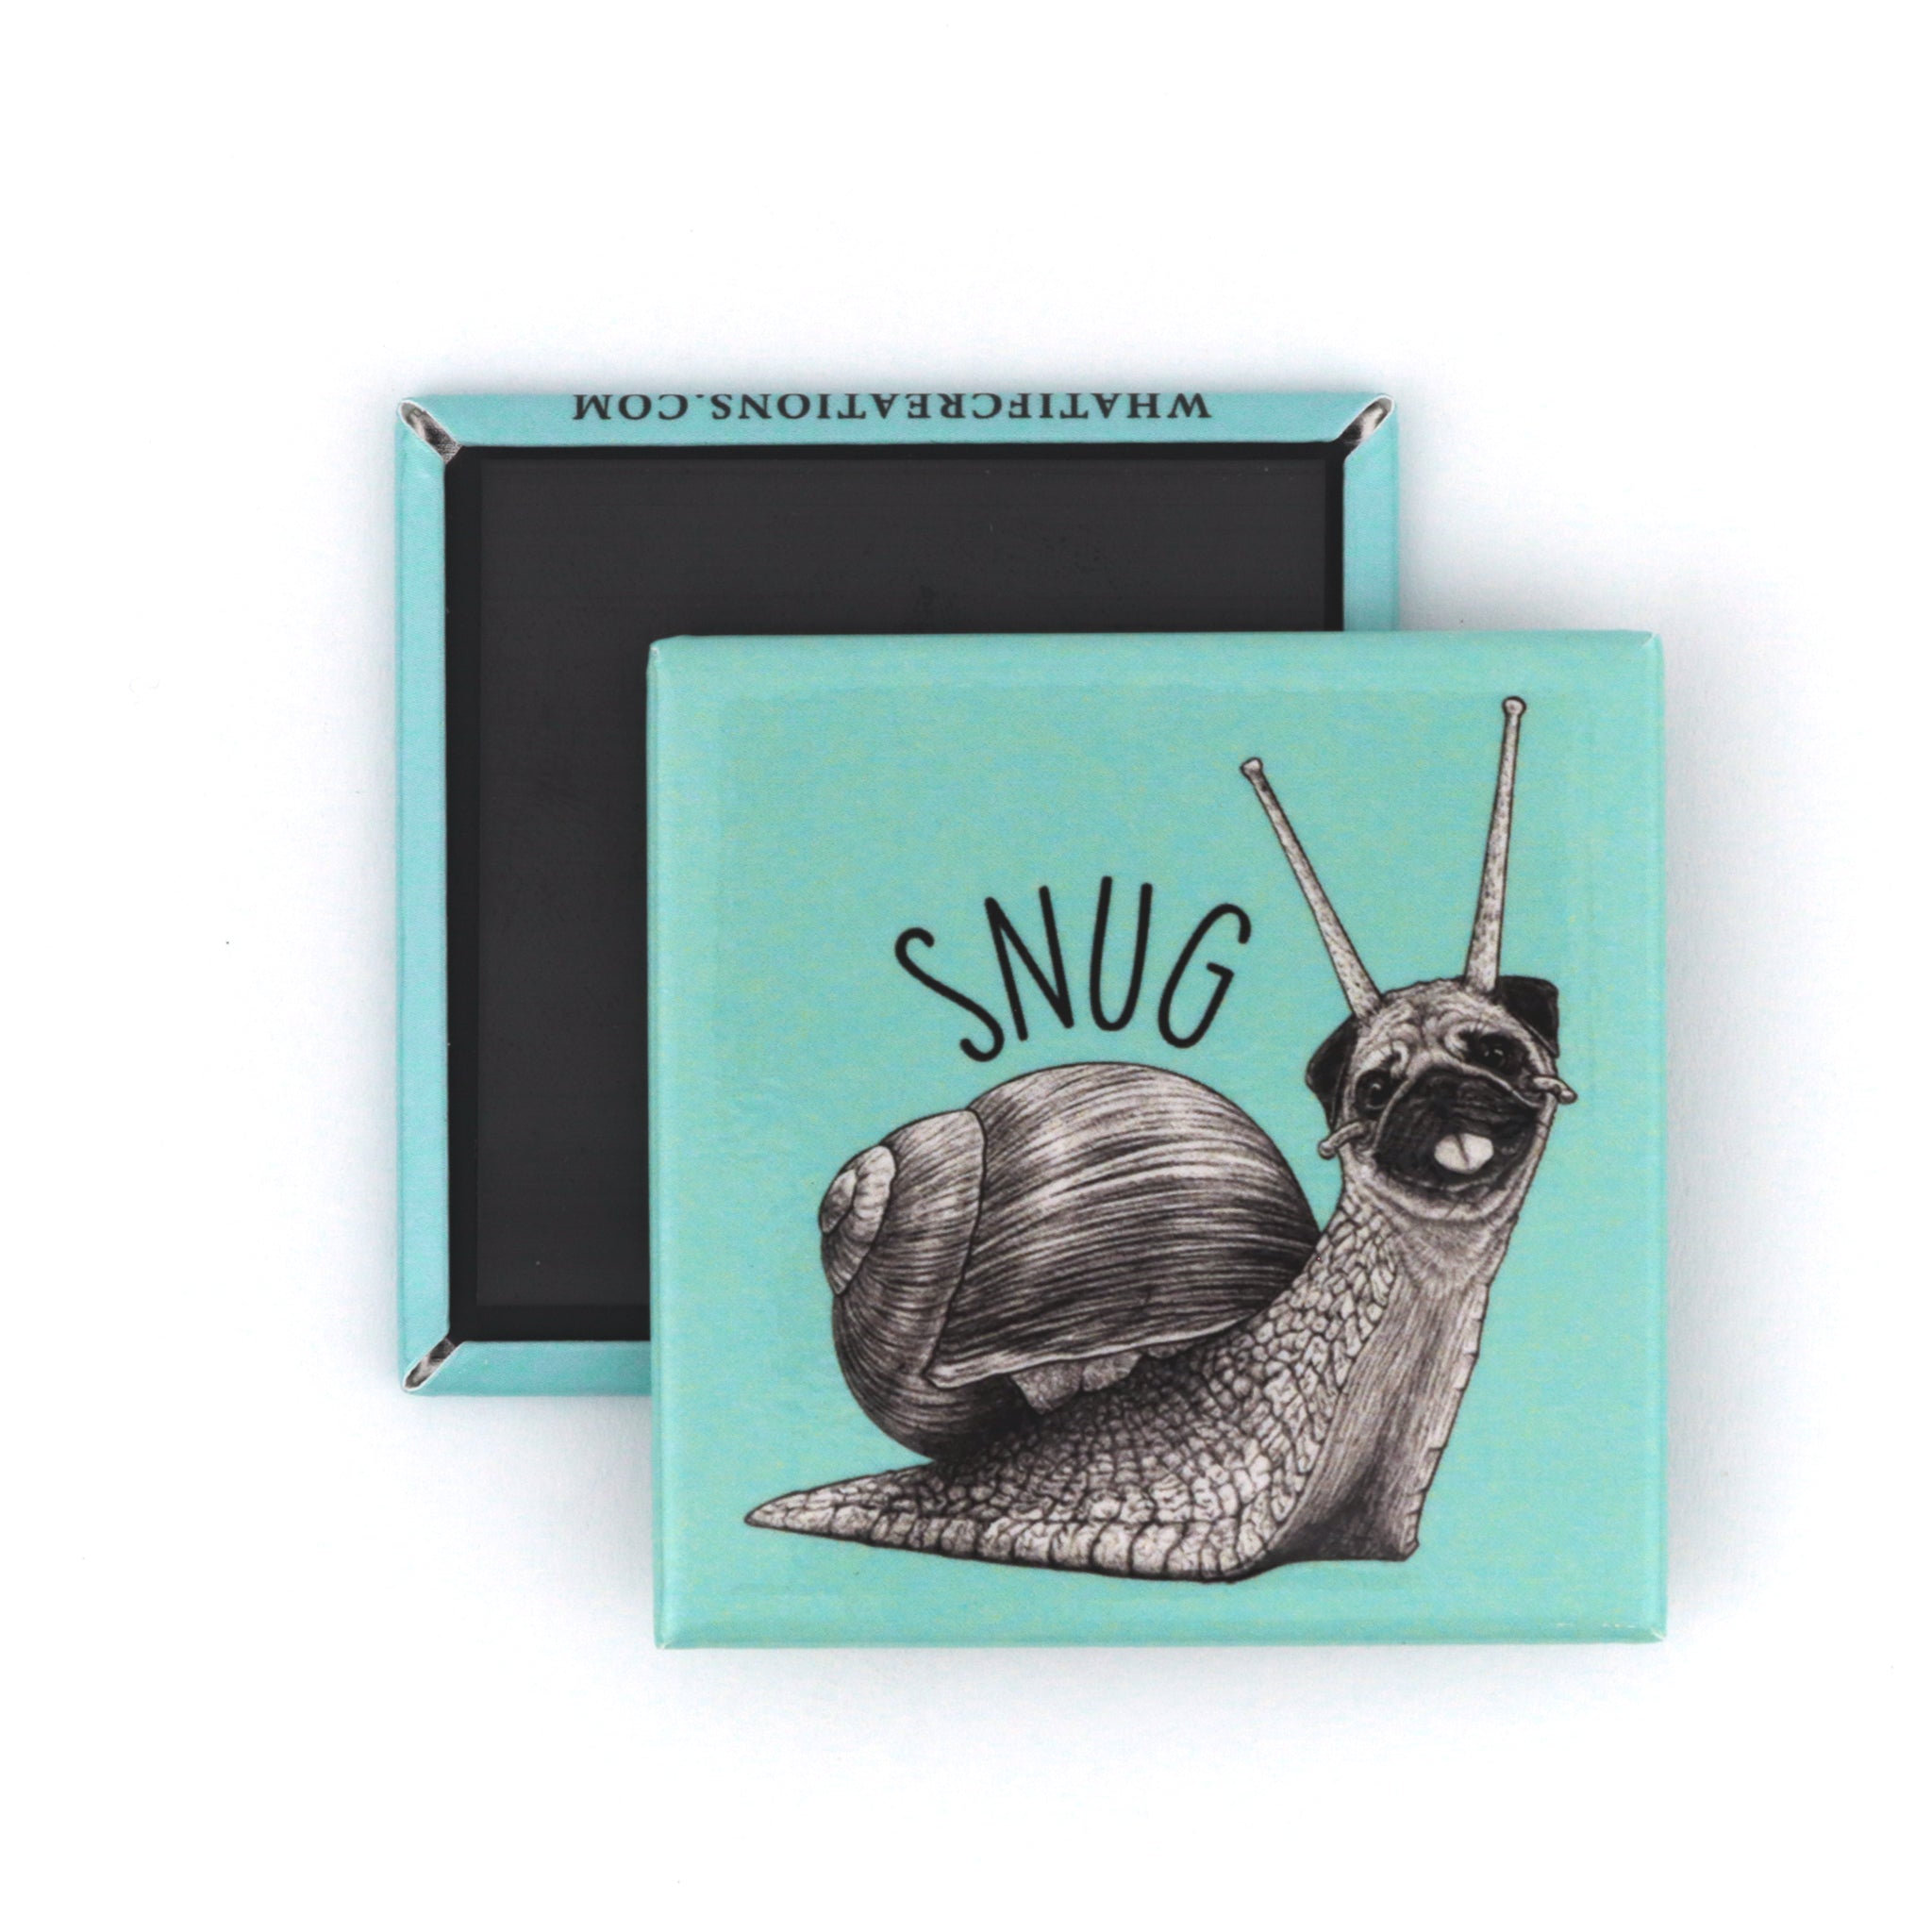 Snug | Snail + Pug Hybrid Animal | 2" Fridge Magnet